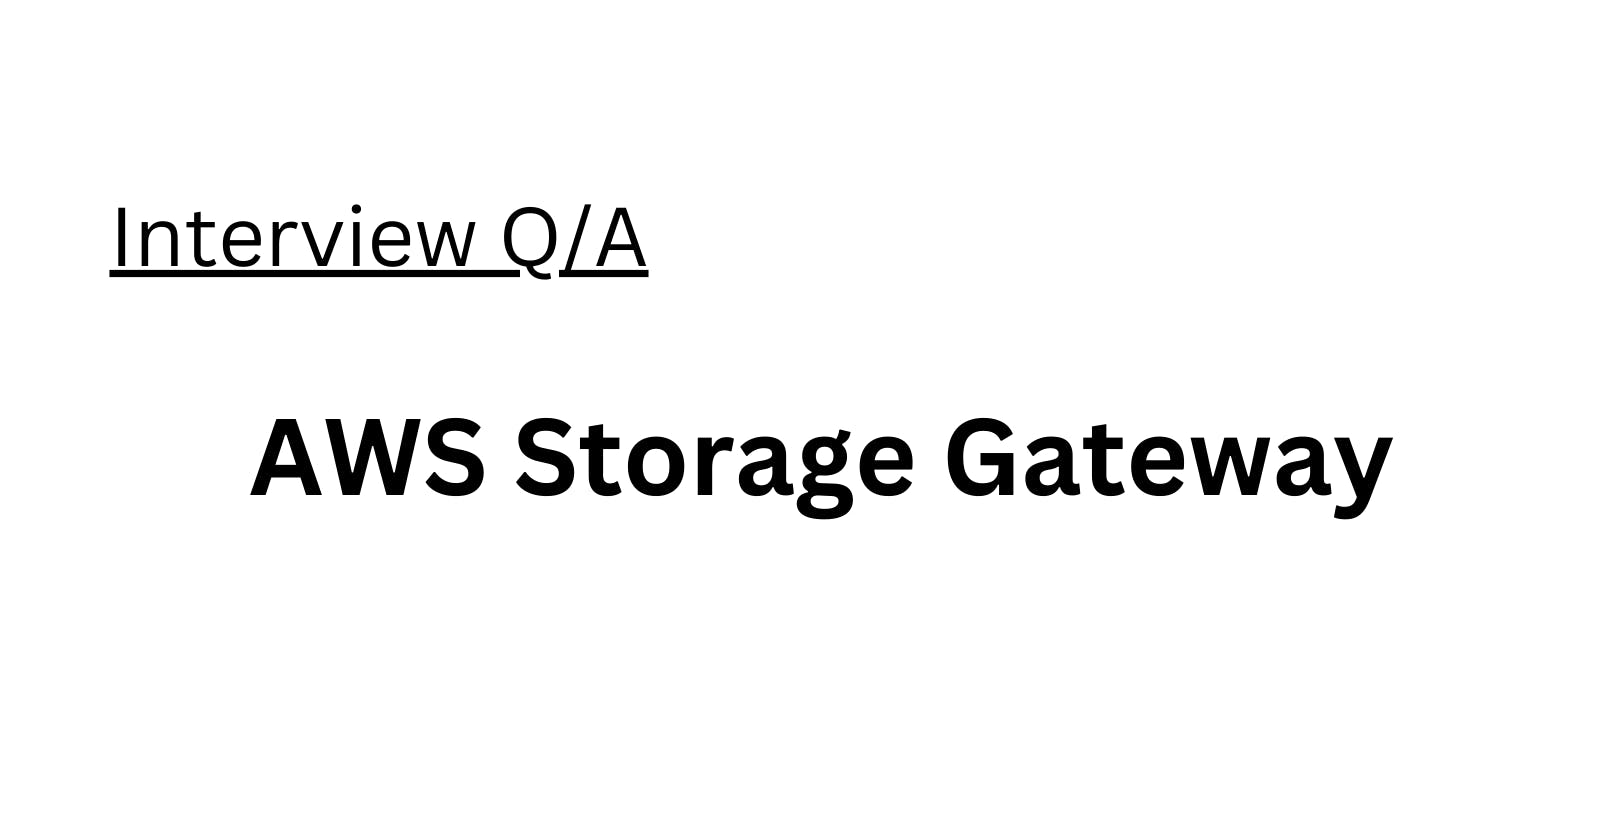 AWS Storage Gateway Interview Q/A